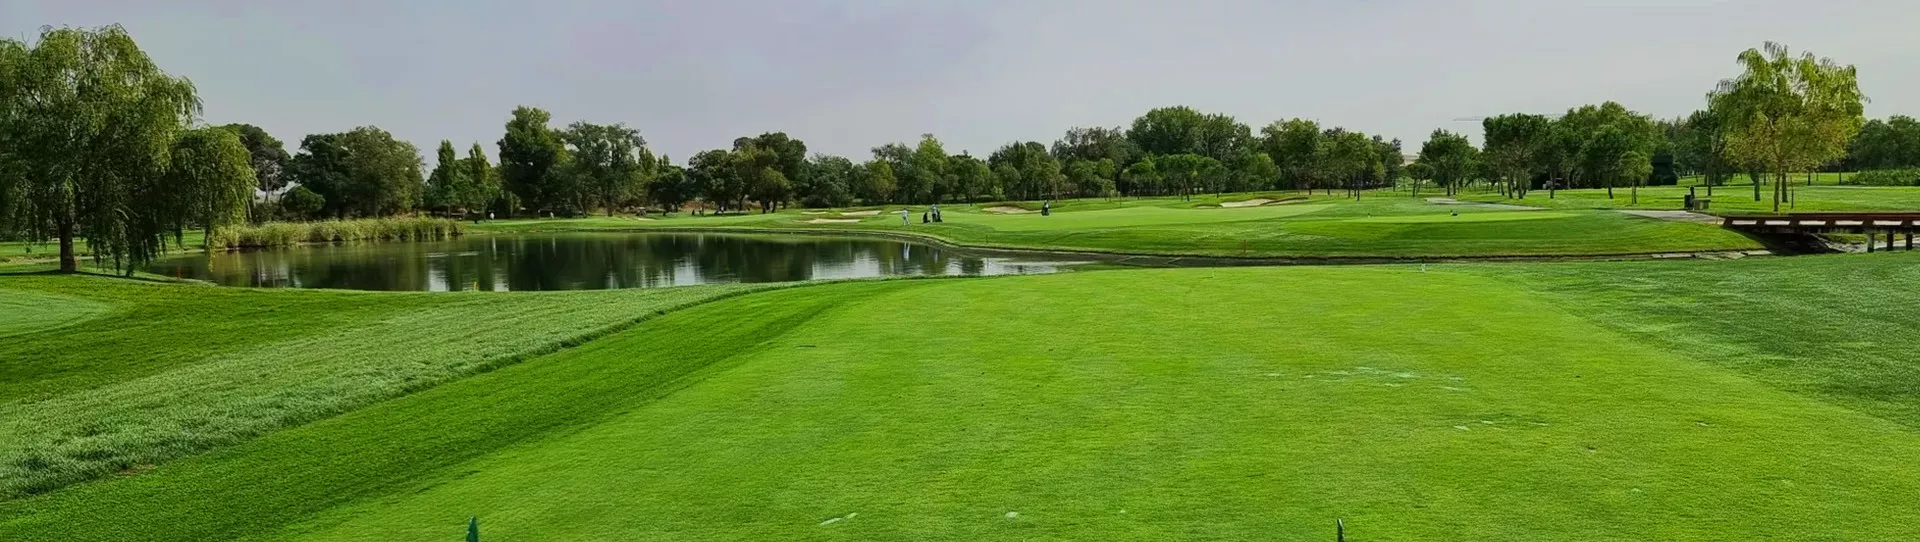 Spain golf courses - La Moraleja Golf Course III - Photo 4